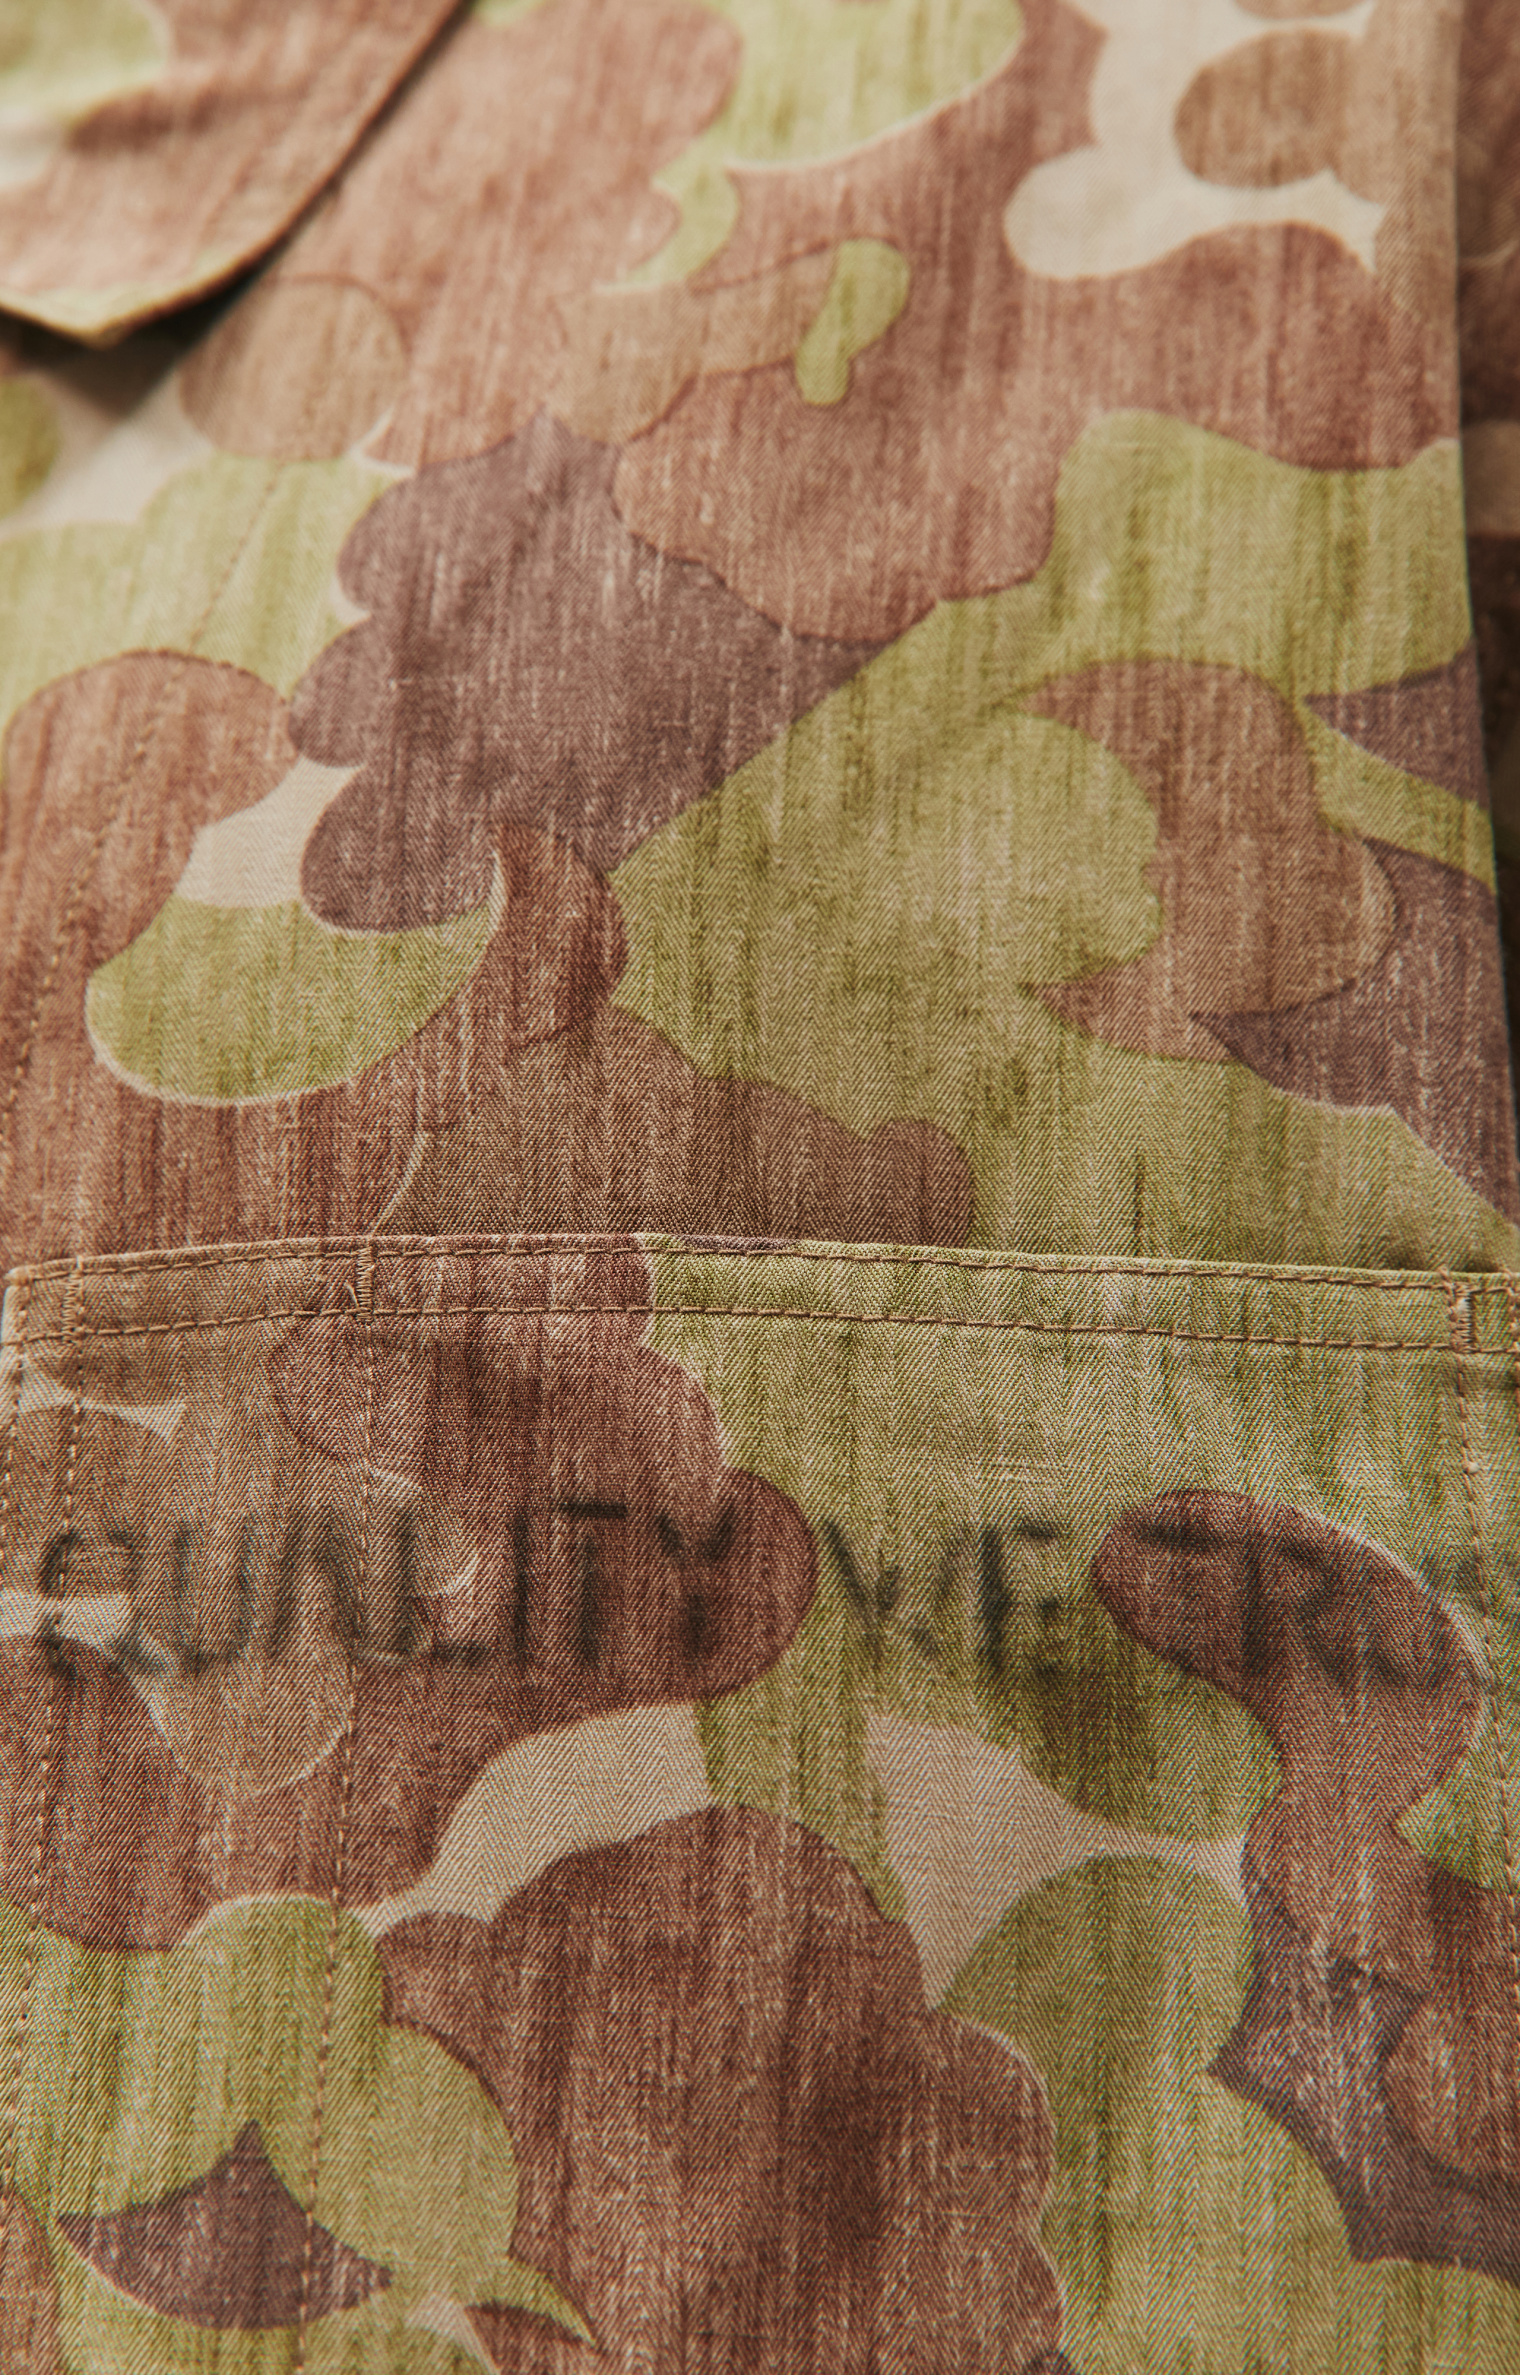 visvim Camouflage Print Wool Jacket